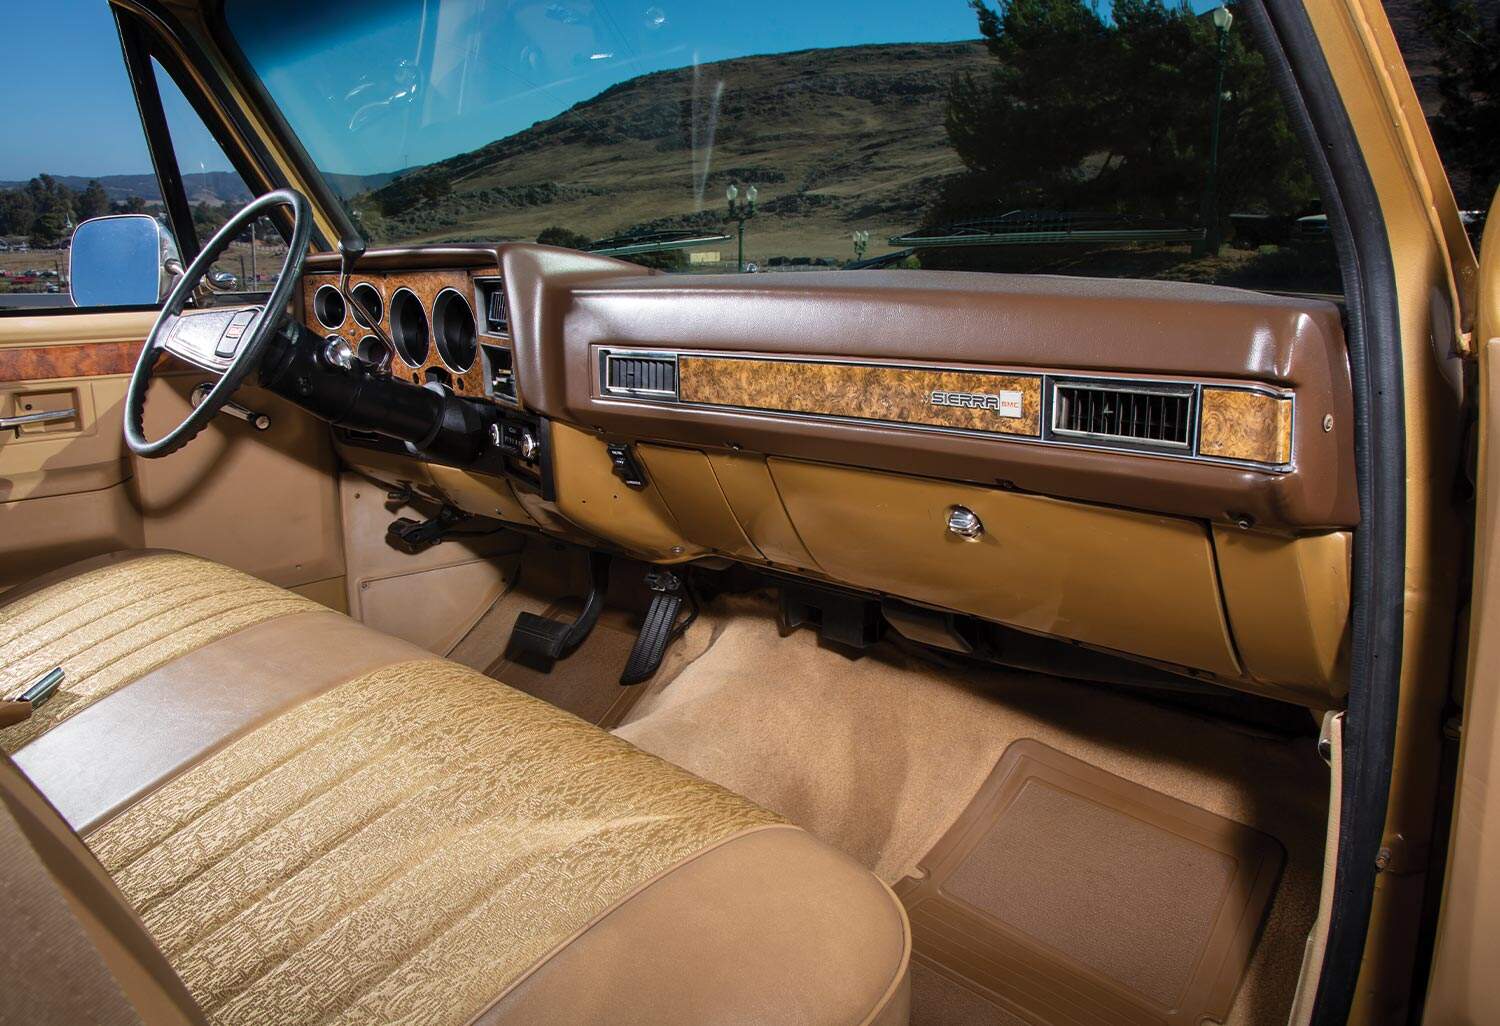 passenger side interior view of the '84 GMC Sierra